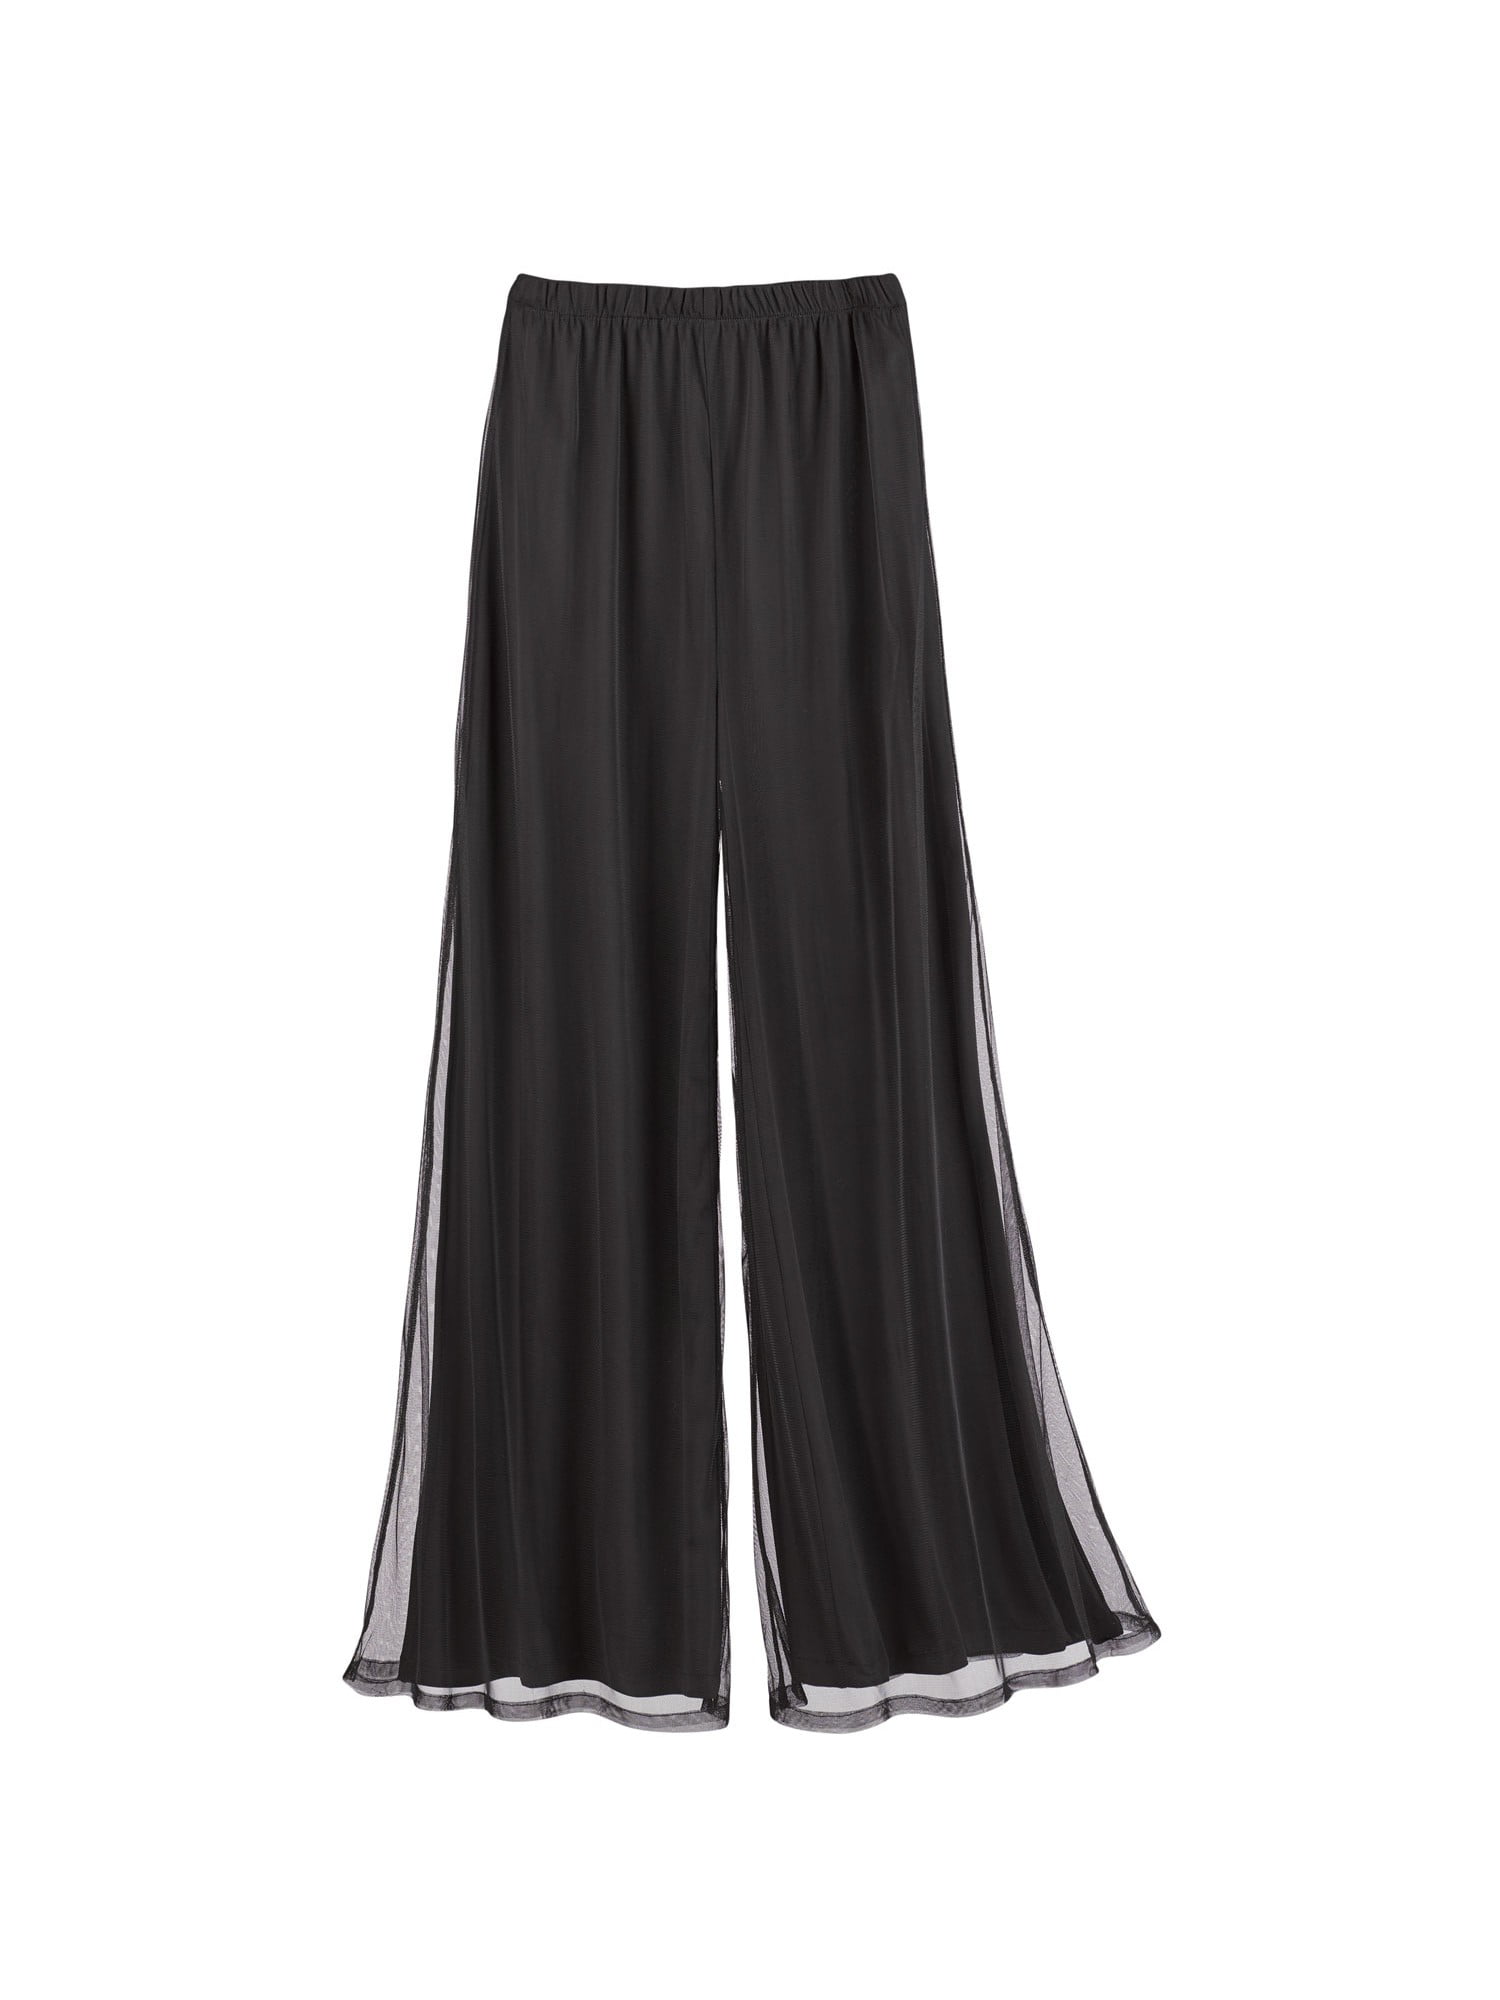 Lindi - Lindi Women's Sheer Overlay Dress Pants - Black Wide Leg